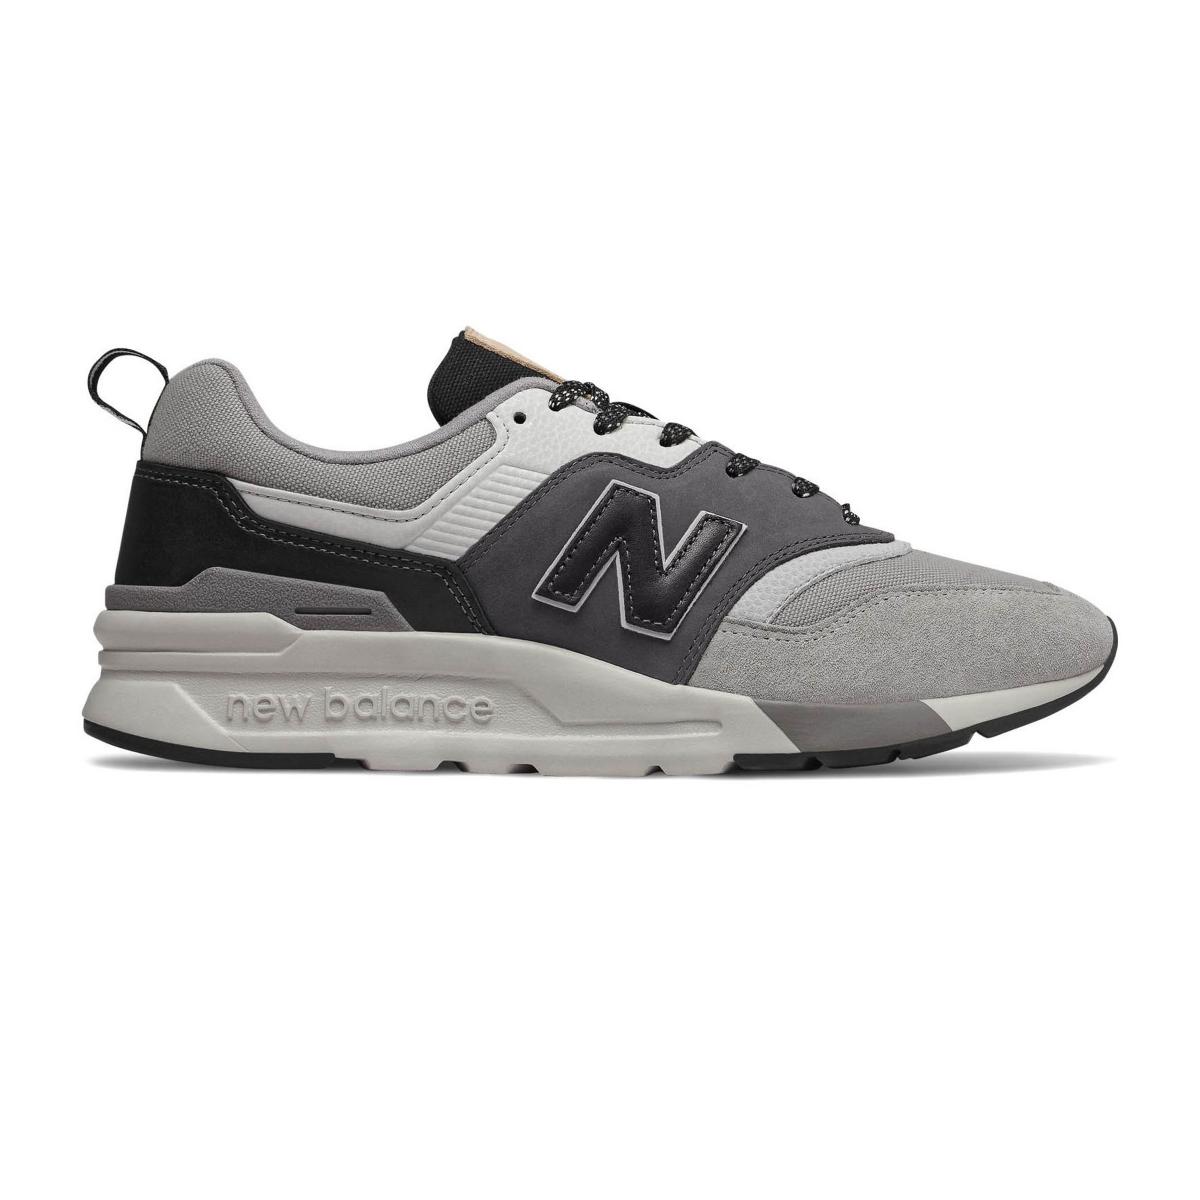 Scarpe Sneakers New Balance 997H da uomo casual grigio rif. CM997HDU